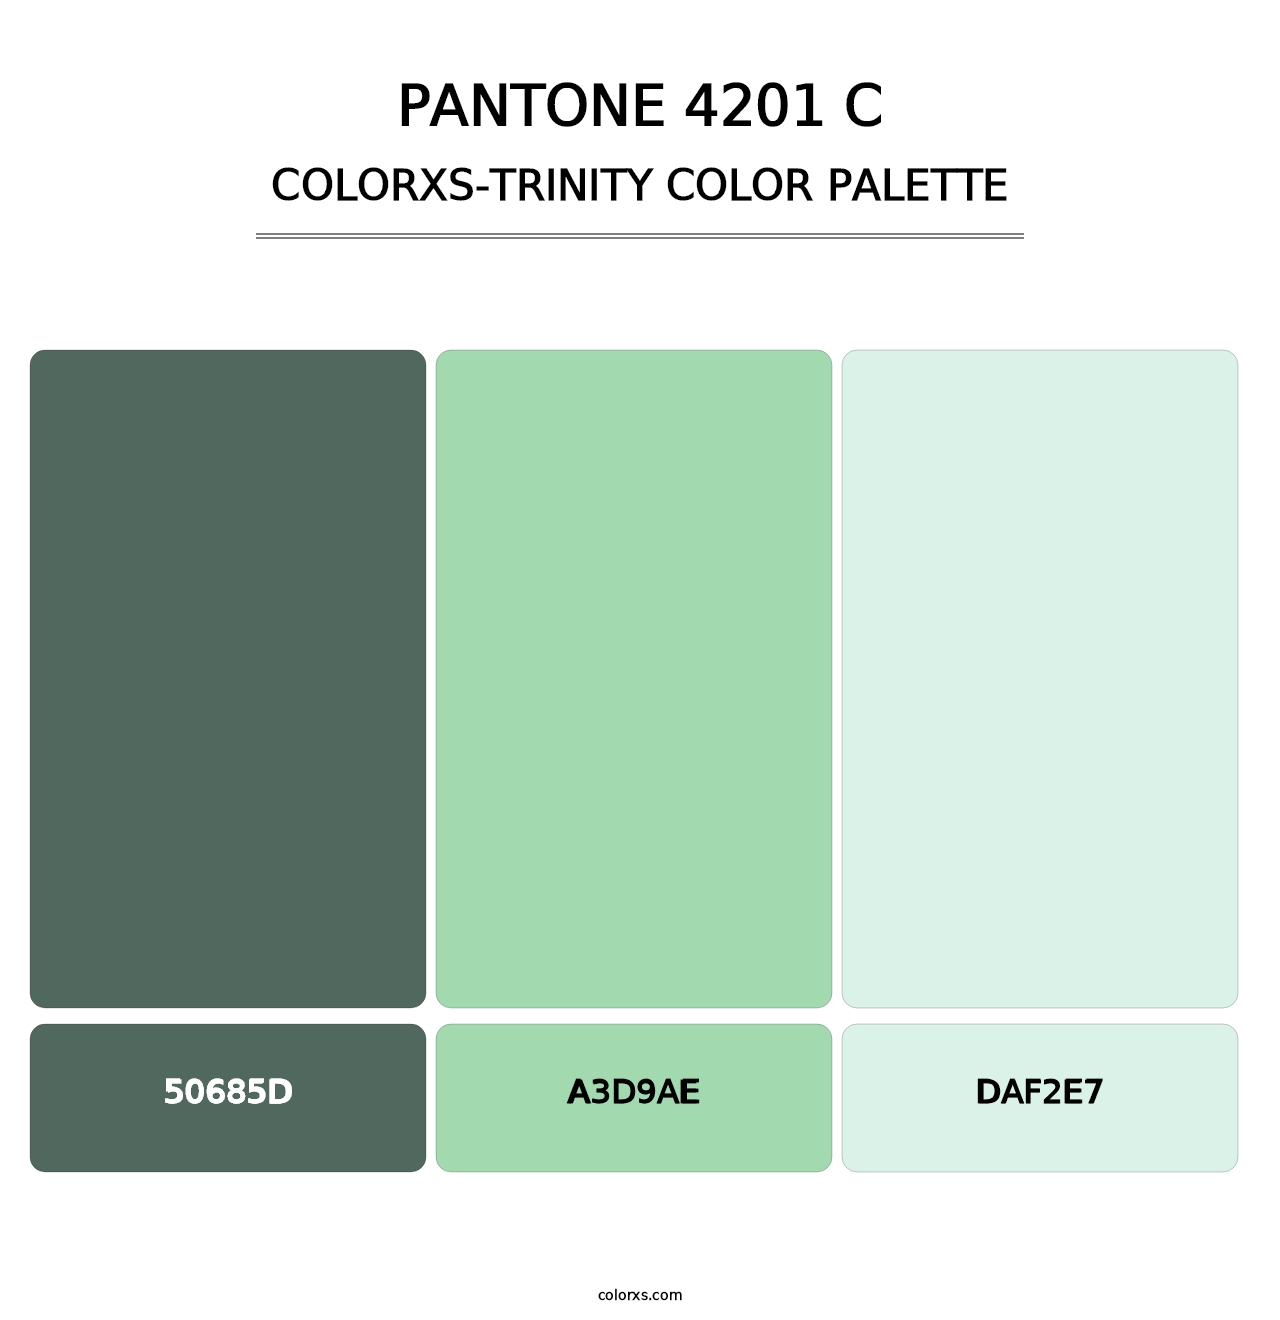 PANTONE 4201 C - Colorxs Trinity Palette